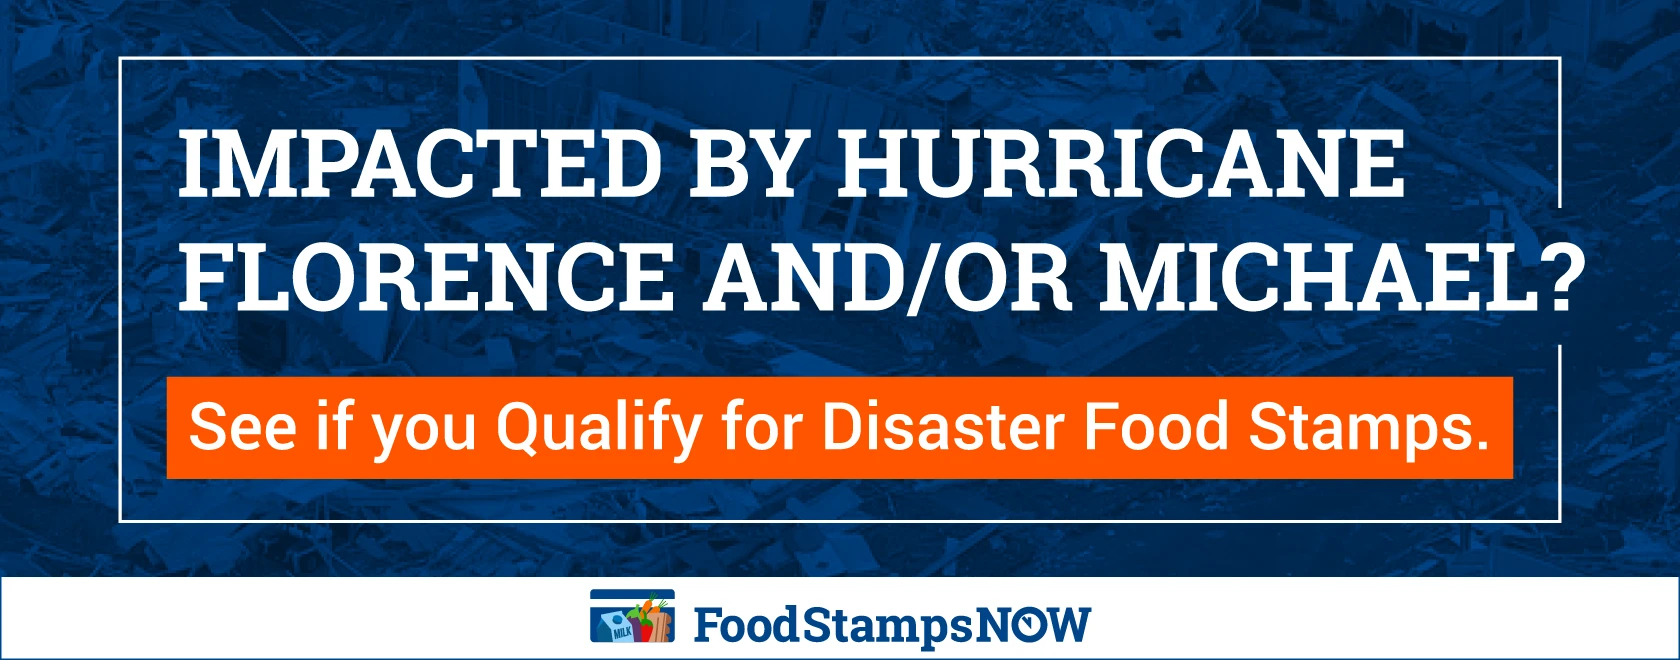 "Hurricane Michael Disaster Food Stamps Florida and Georgia"